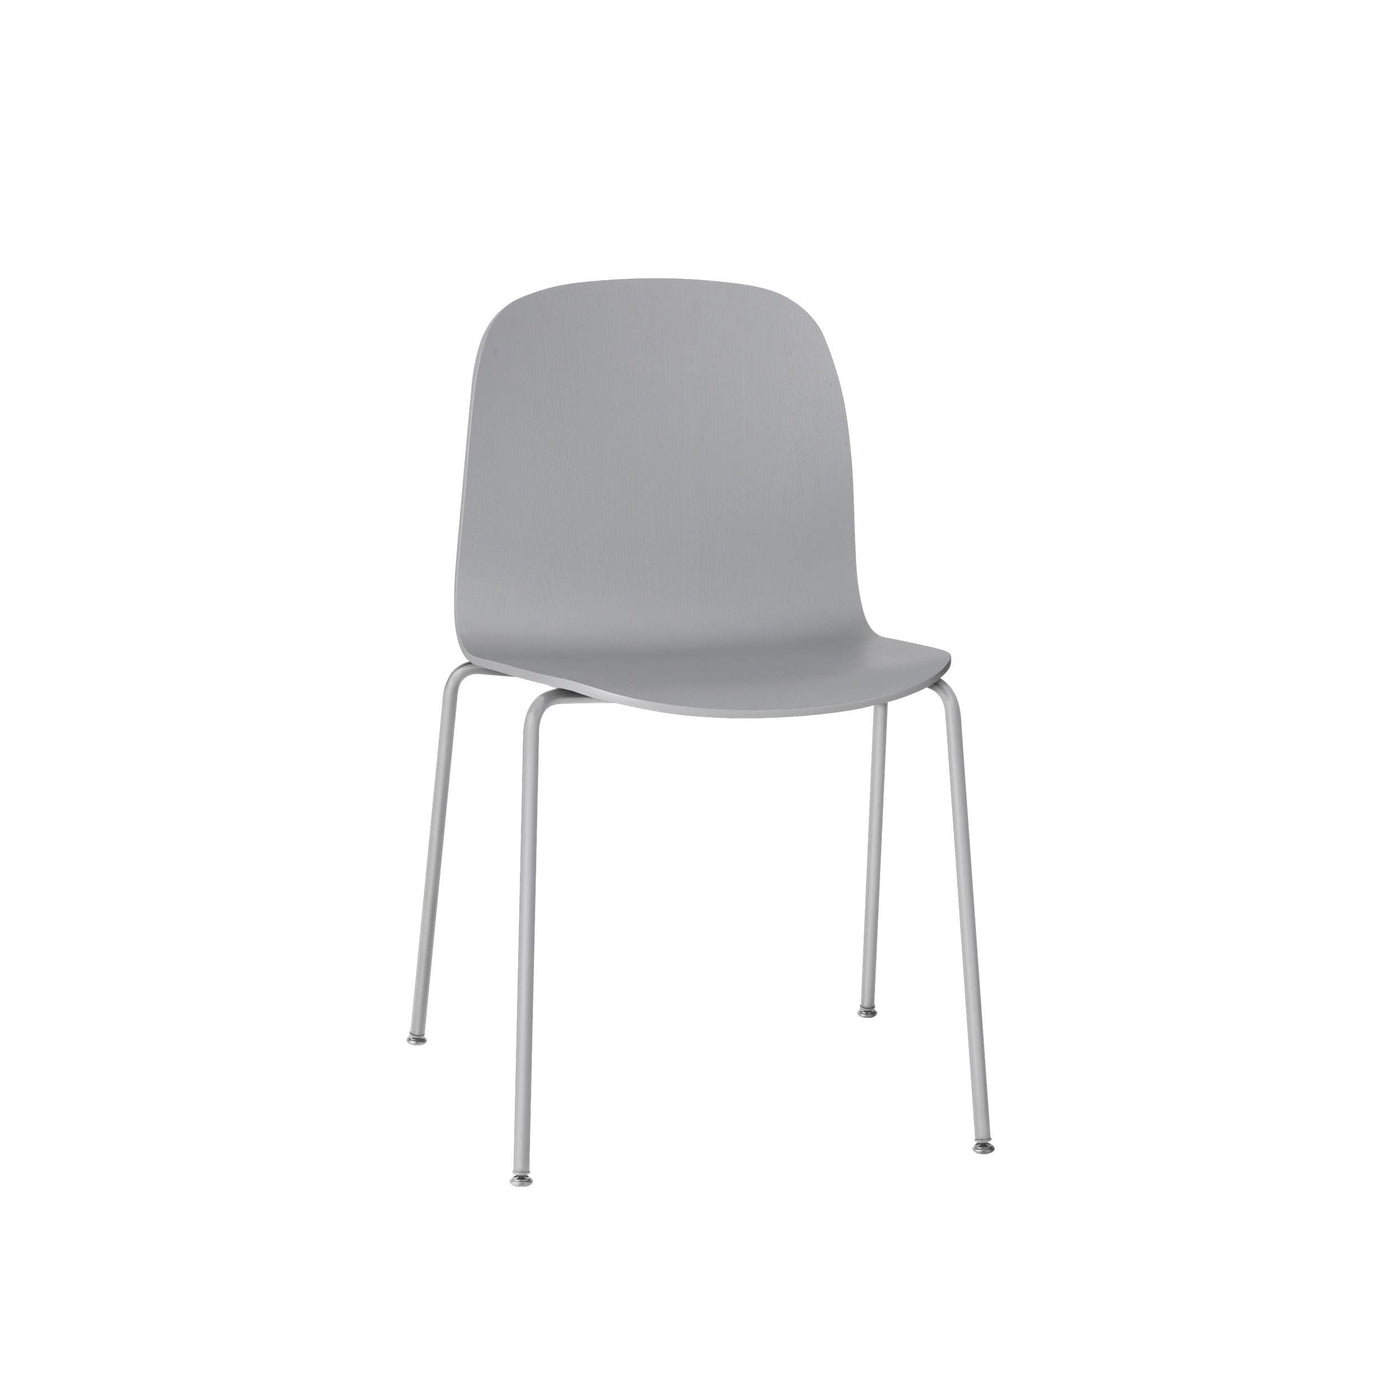 Muuto Visu chair tube base. Shop online at someday designs. #colour_grey